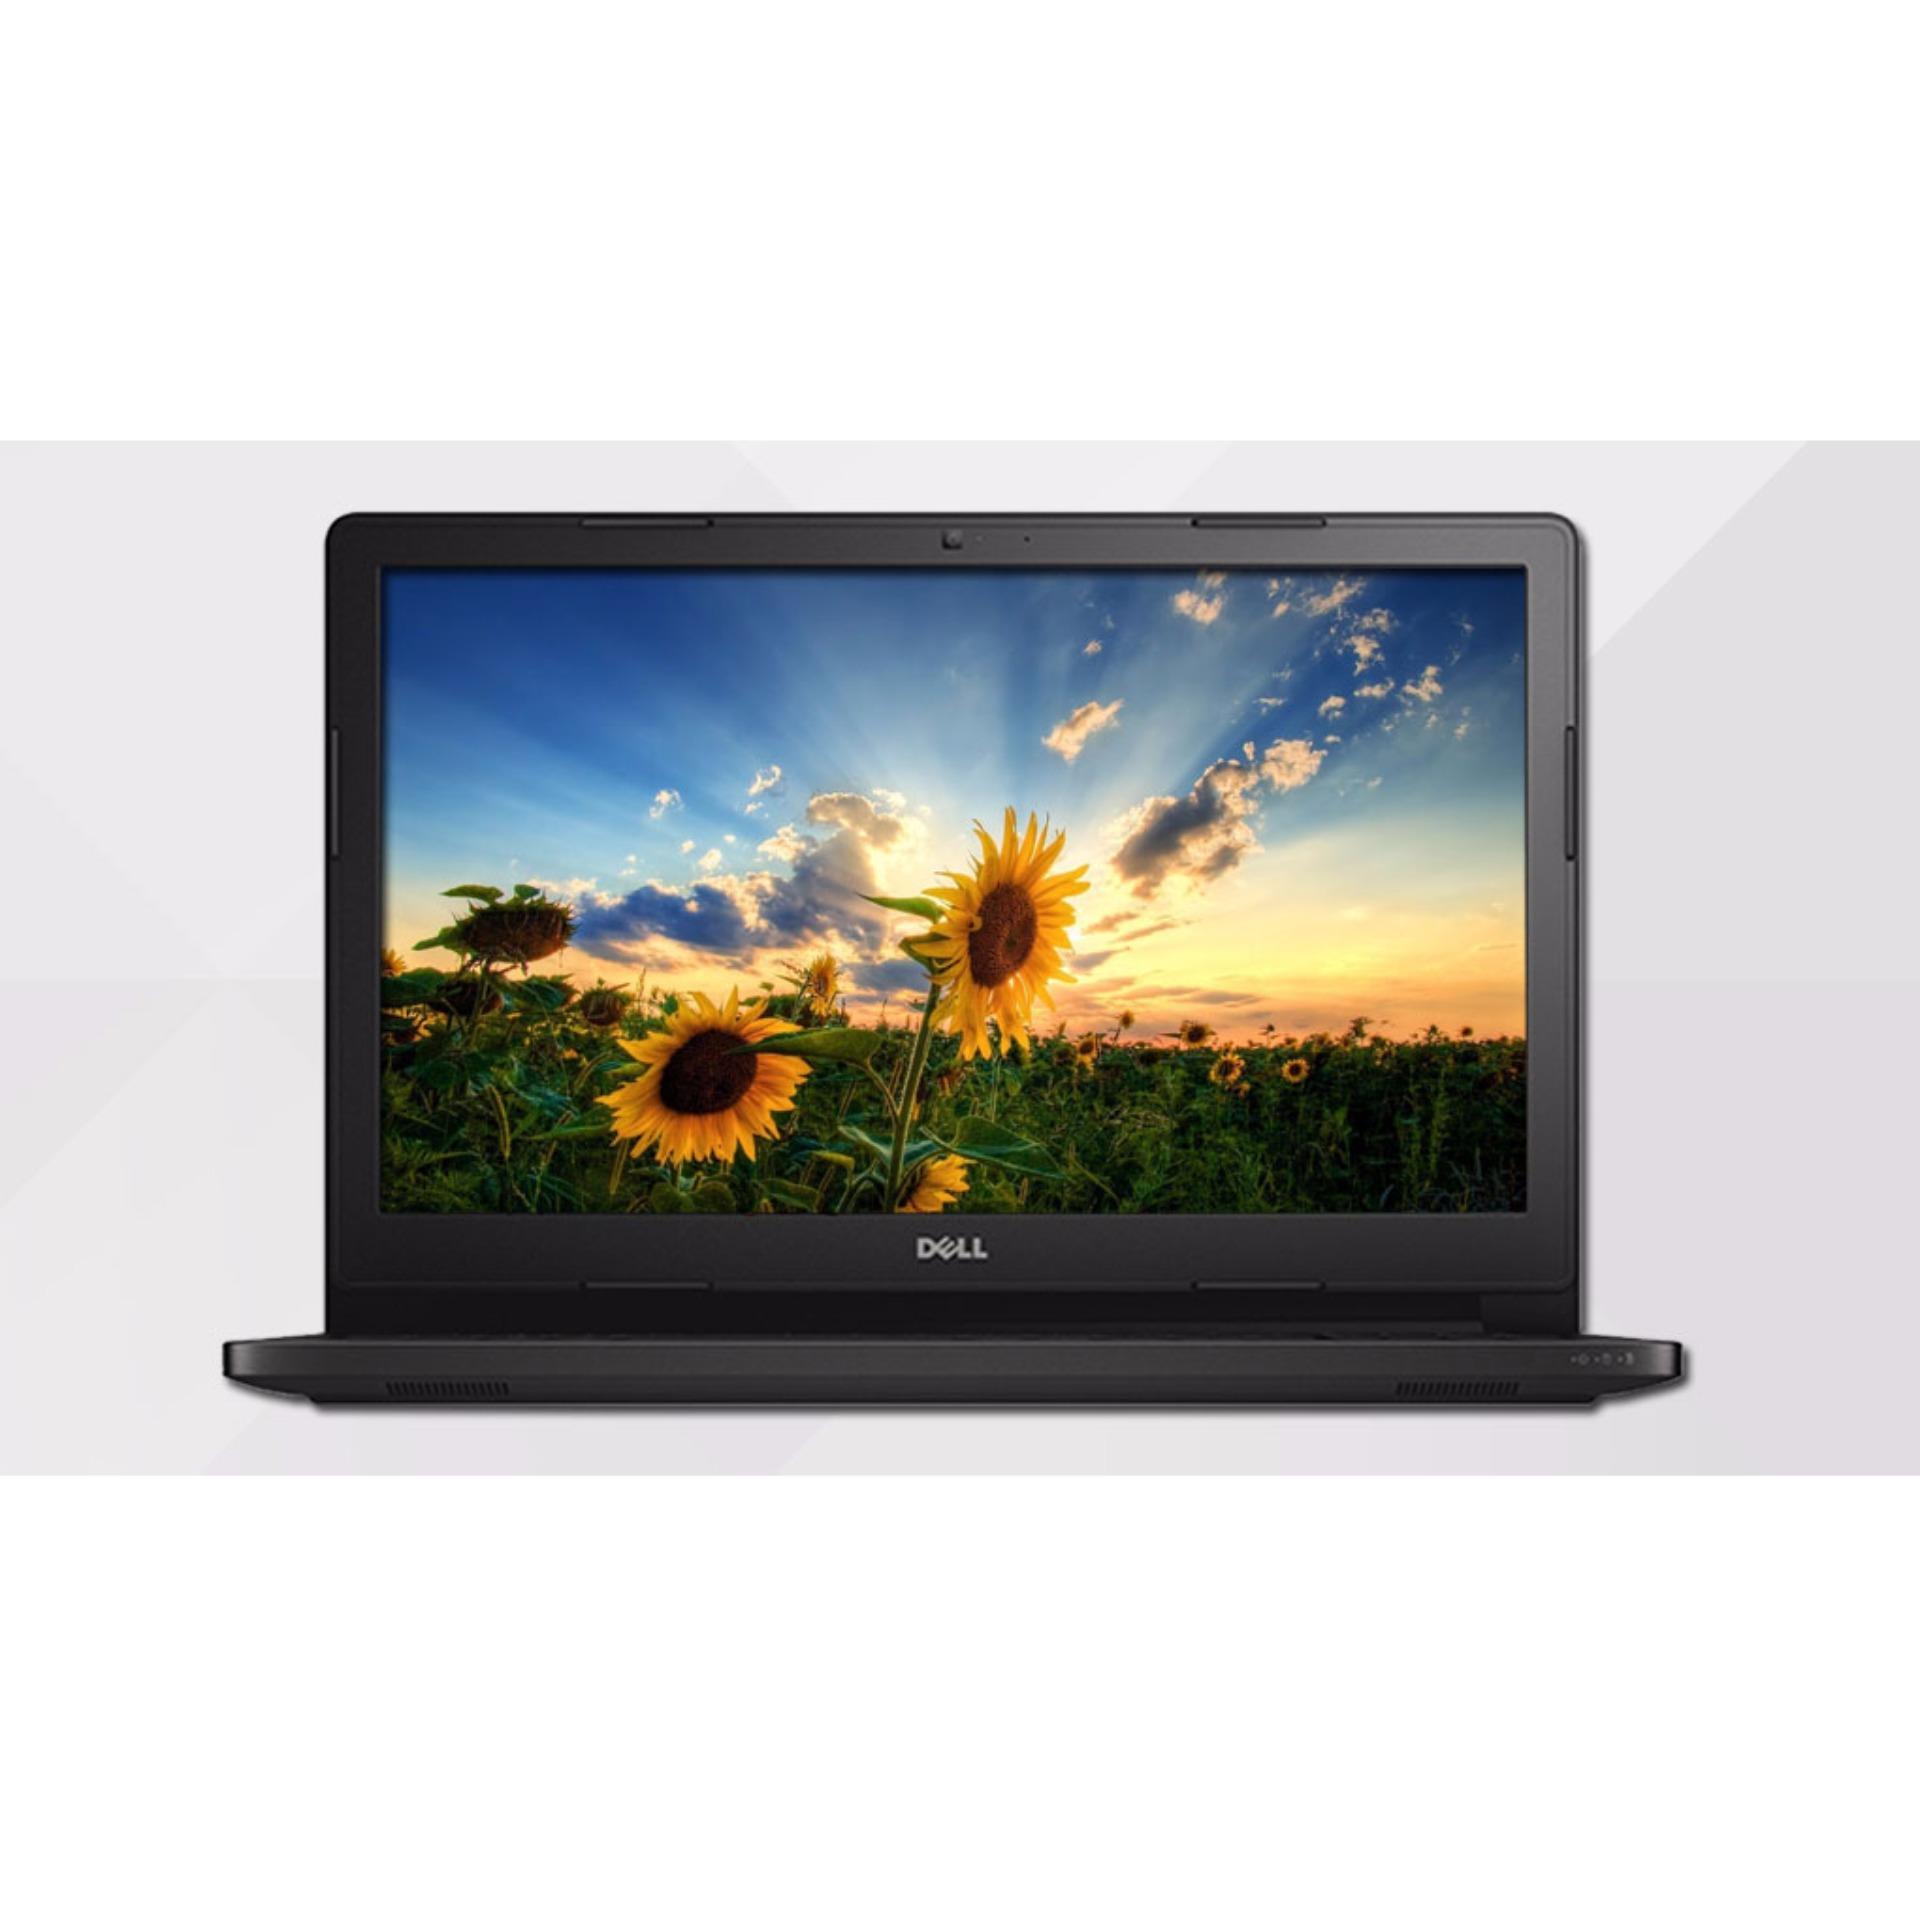 Laptop DELL Vostro 3568 XF6C61 Core i5 7200U 2.5Ghz, 4GB, 1TB, Intel HD 620, DVDRW, 15.6